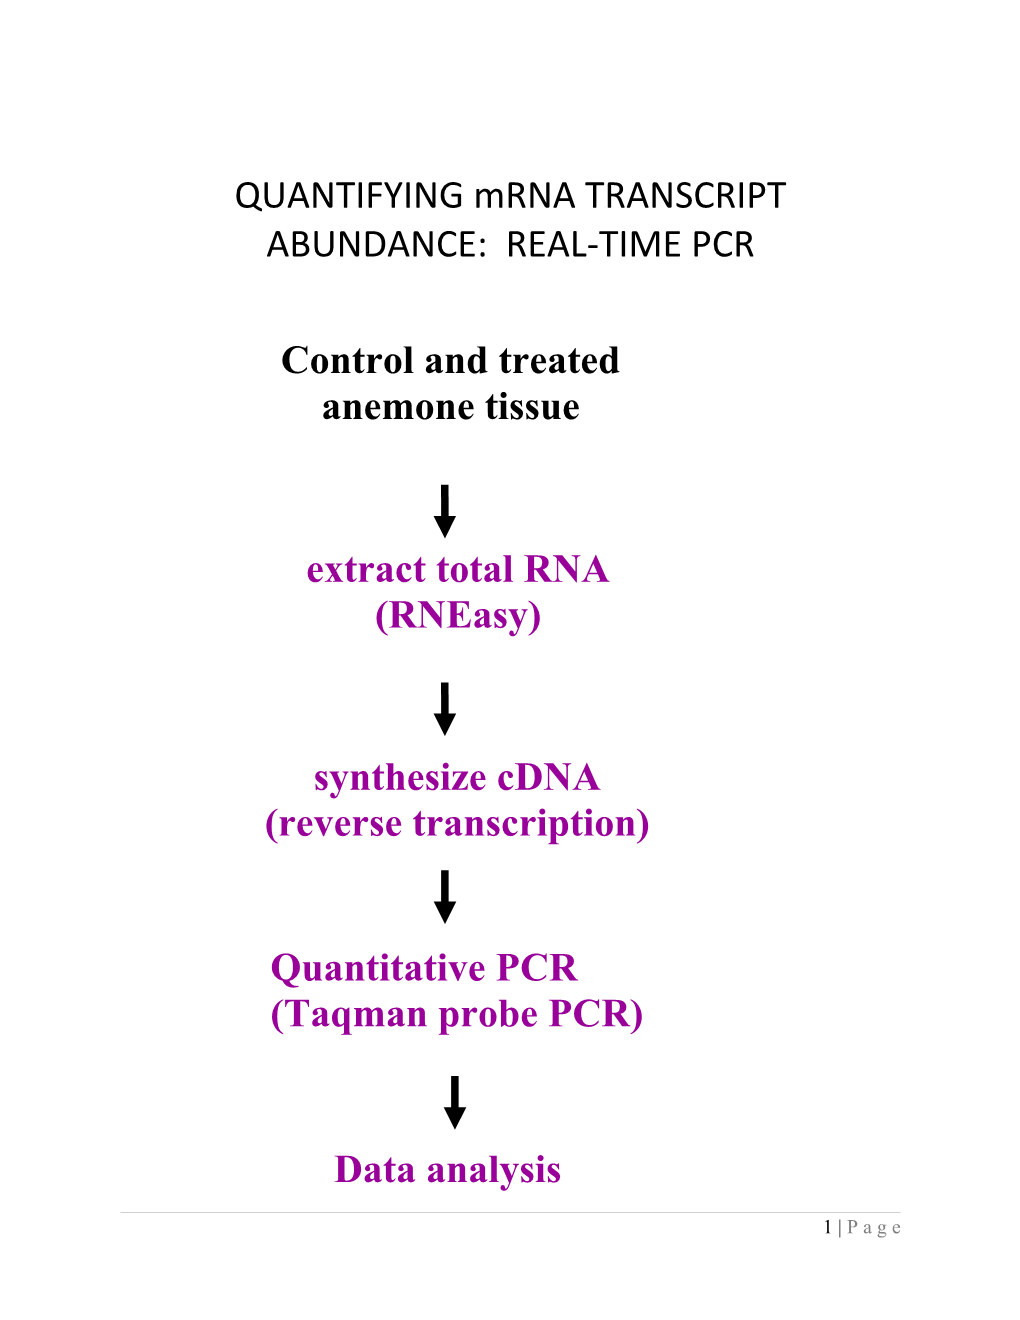 QUANTIFYING Mrna TRANSCRIPT ABUNDANCE: REAL-TIME PCR